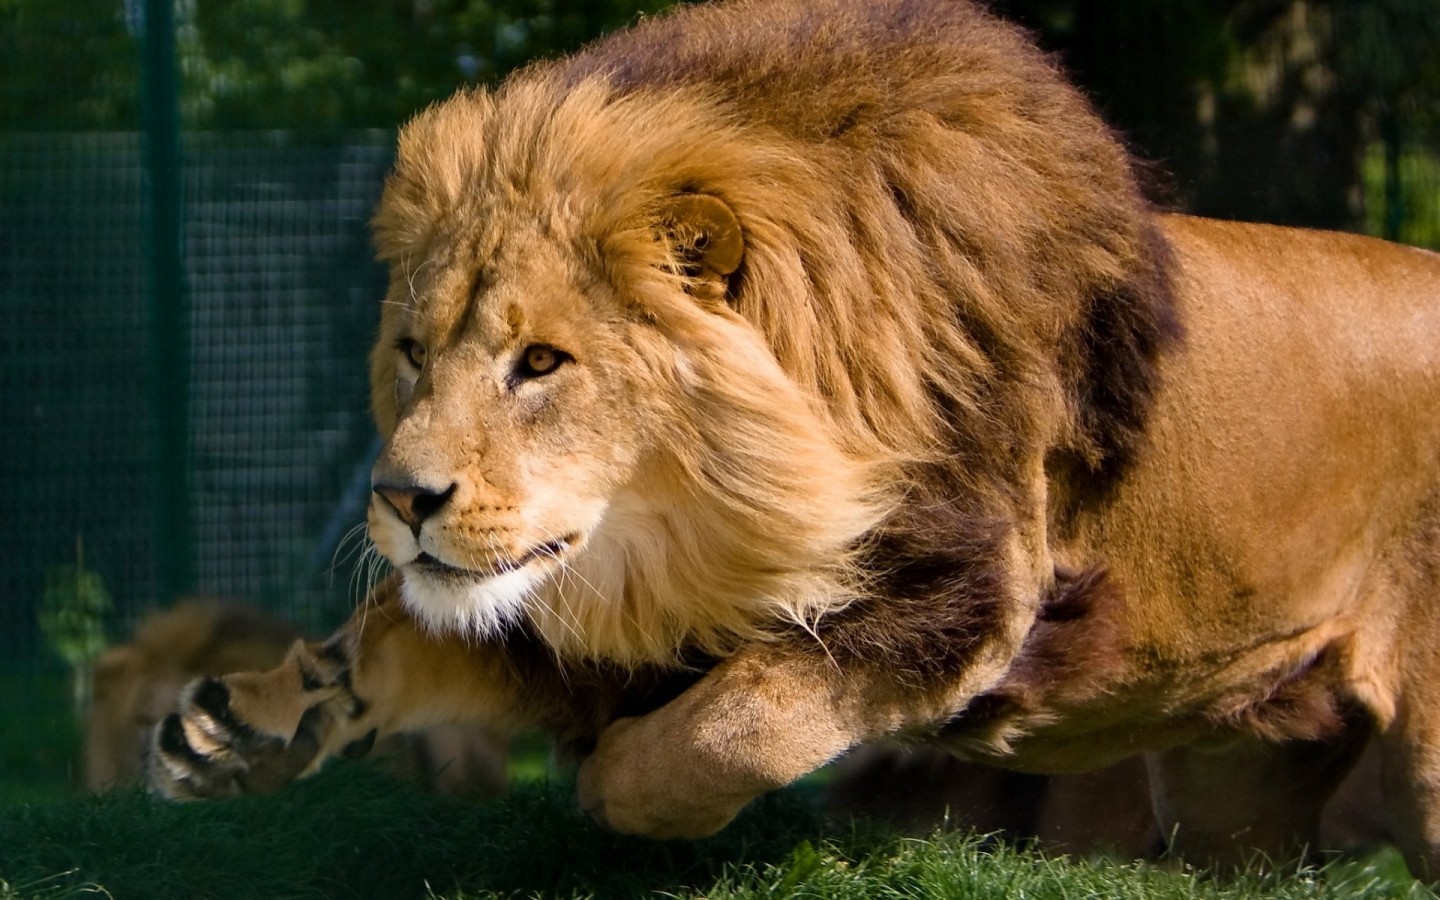 Mature Lion for 1440 x 900 widescreen resolution